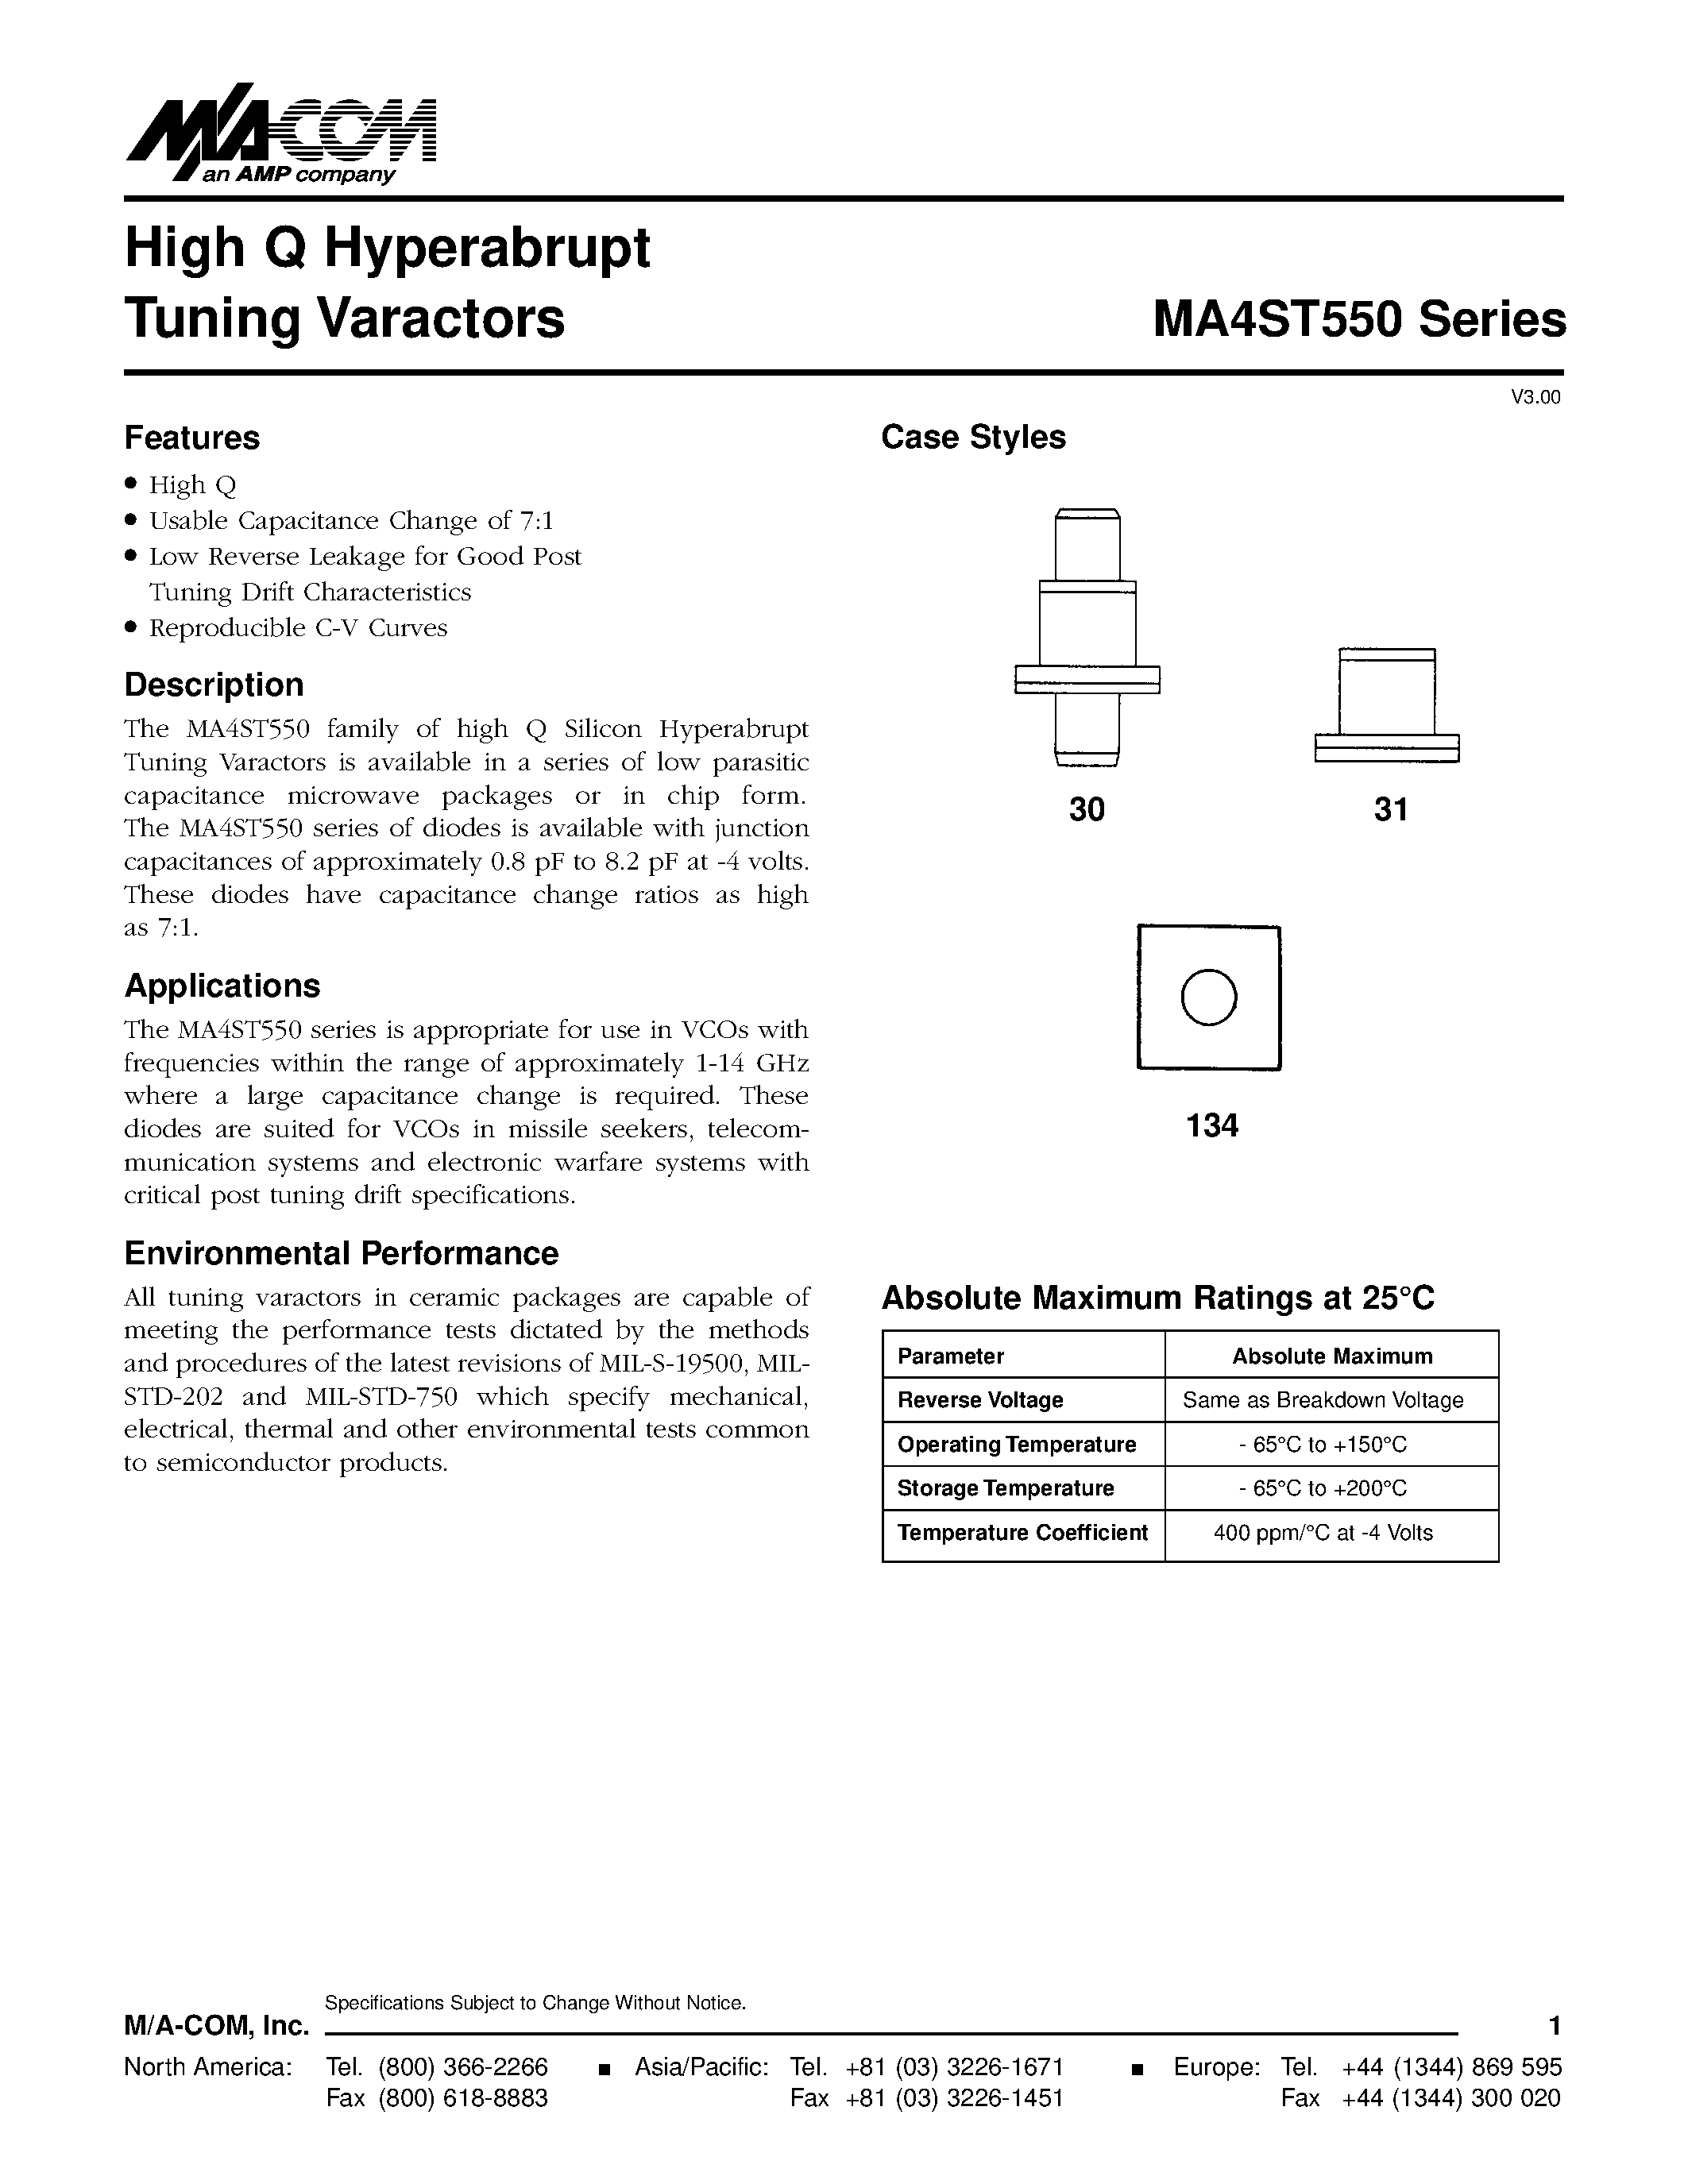 Datasheet MA4ST561 - High Q Hyperabrupt Tuning Varactors page 1